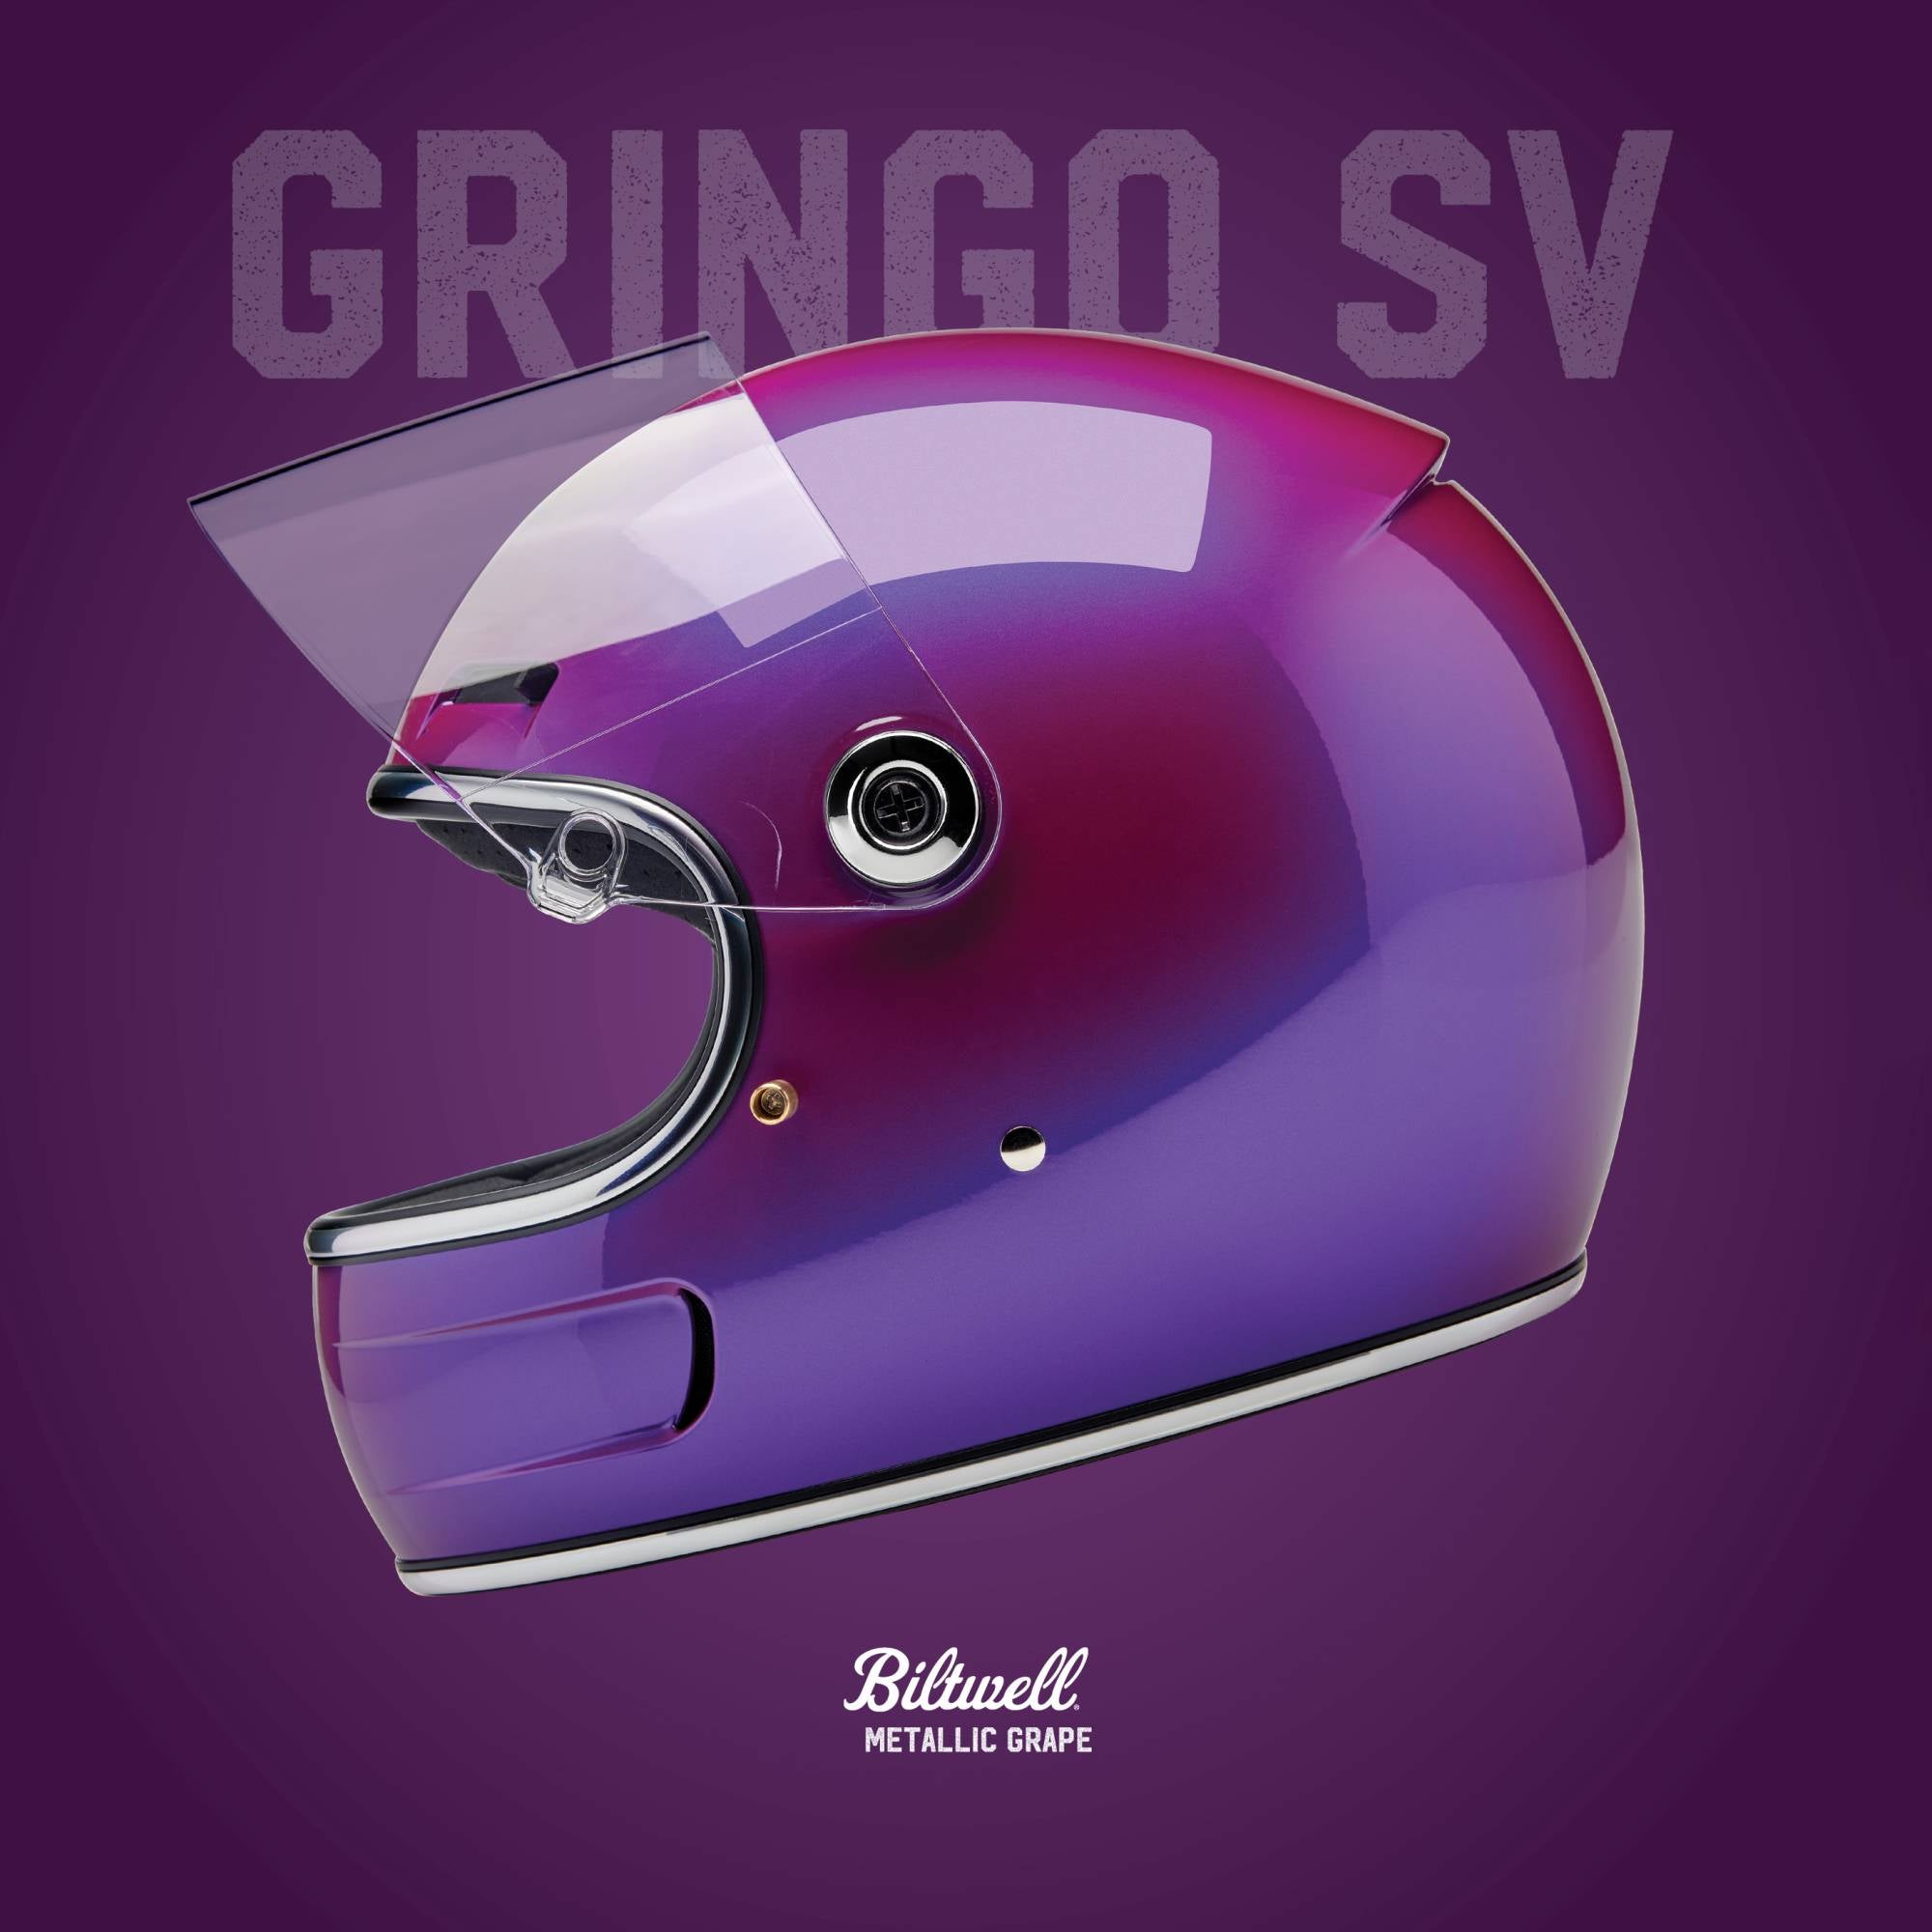 Gringo SV Helmet Metallic Grape